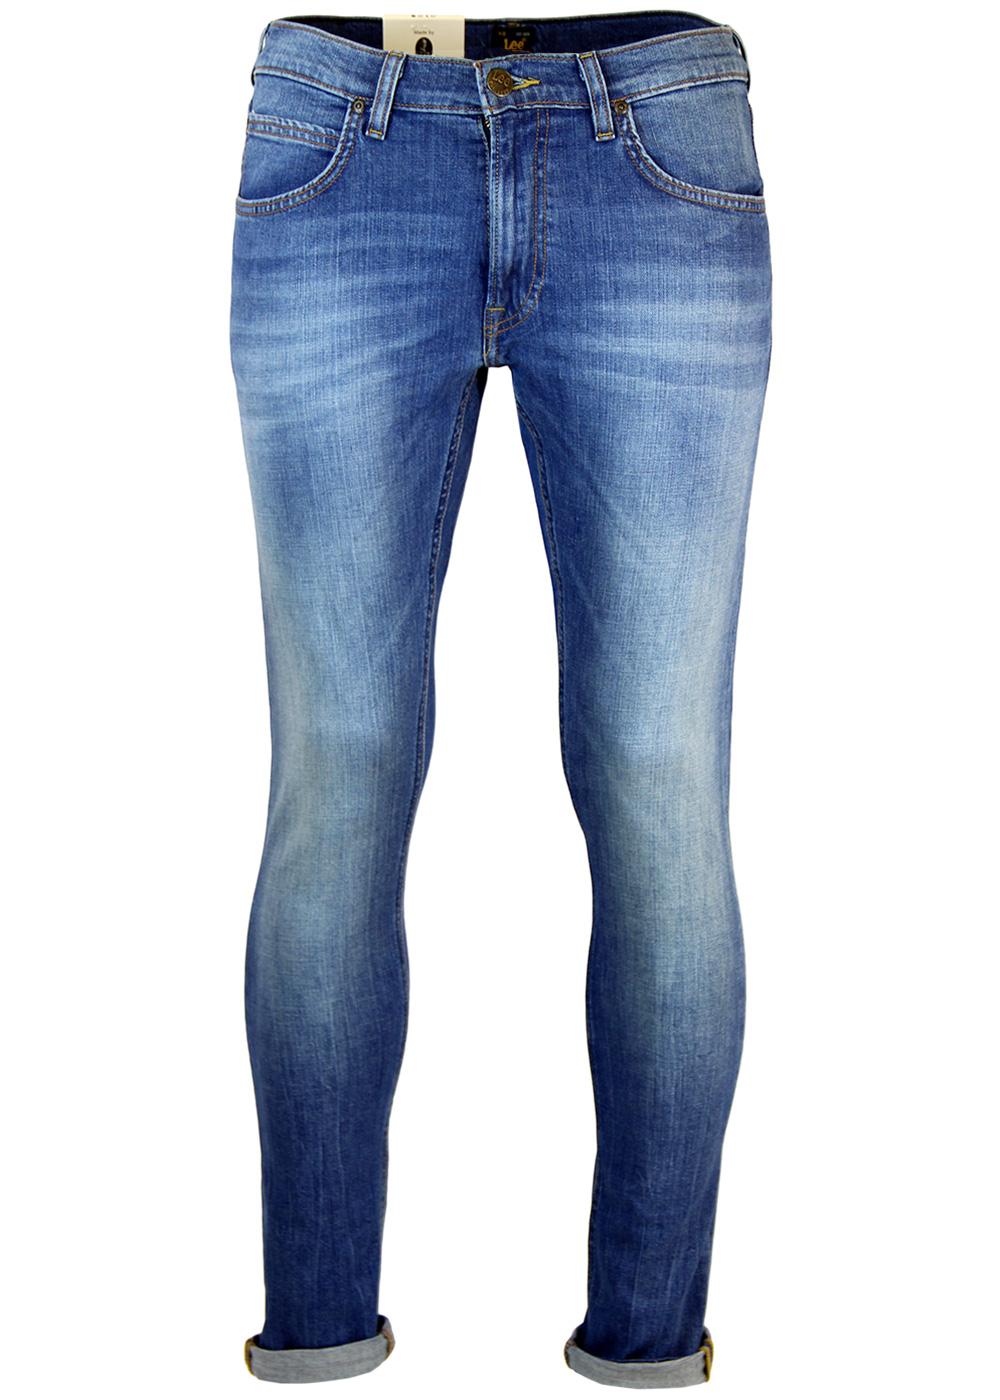 Luke LEE Slim Tapered Authentic Blue Denim Jeans 